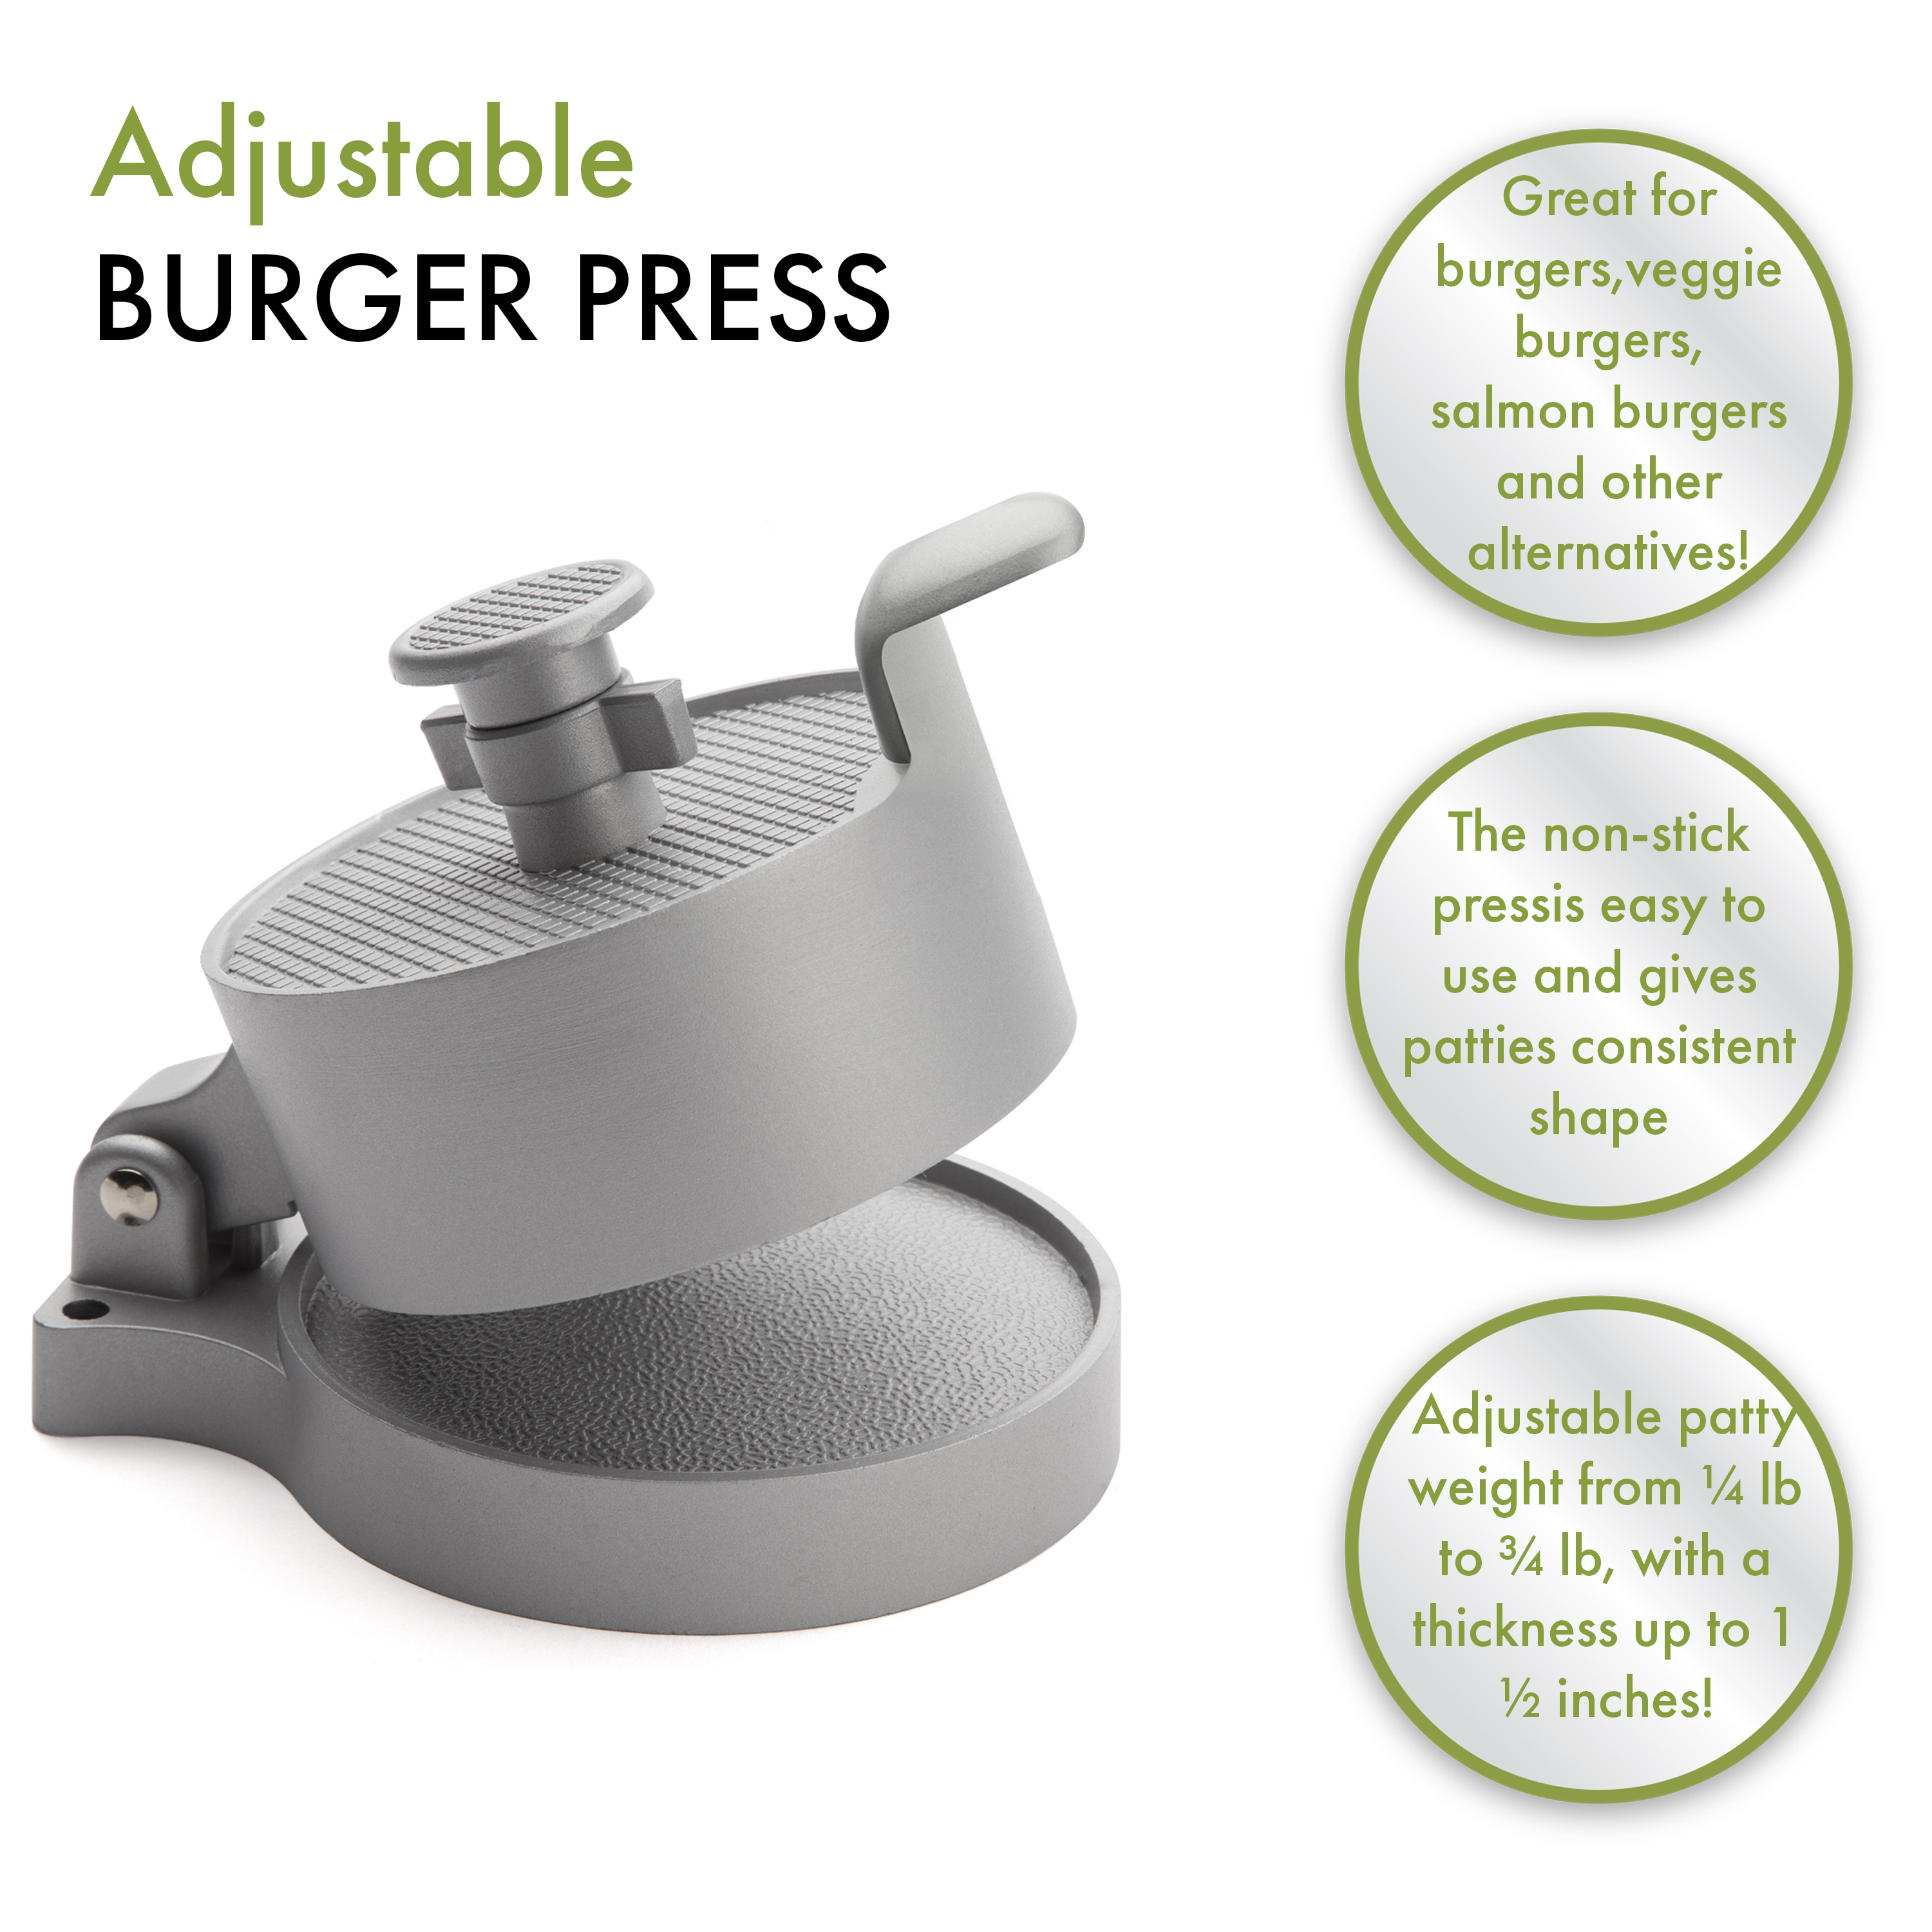 Adjustable Burger Press